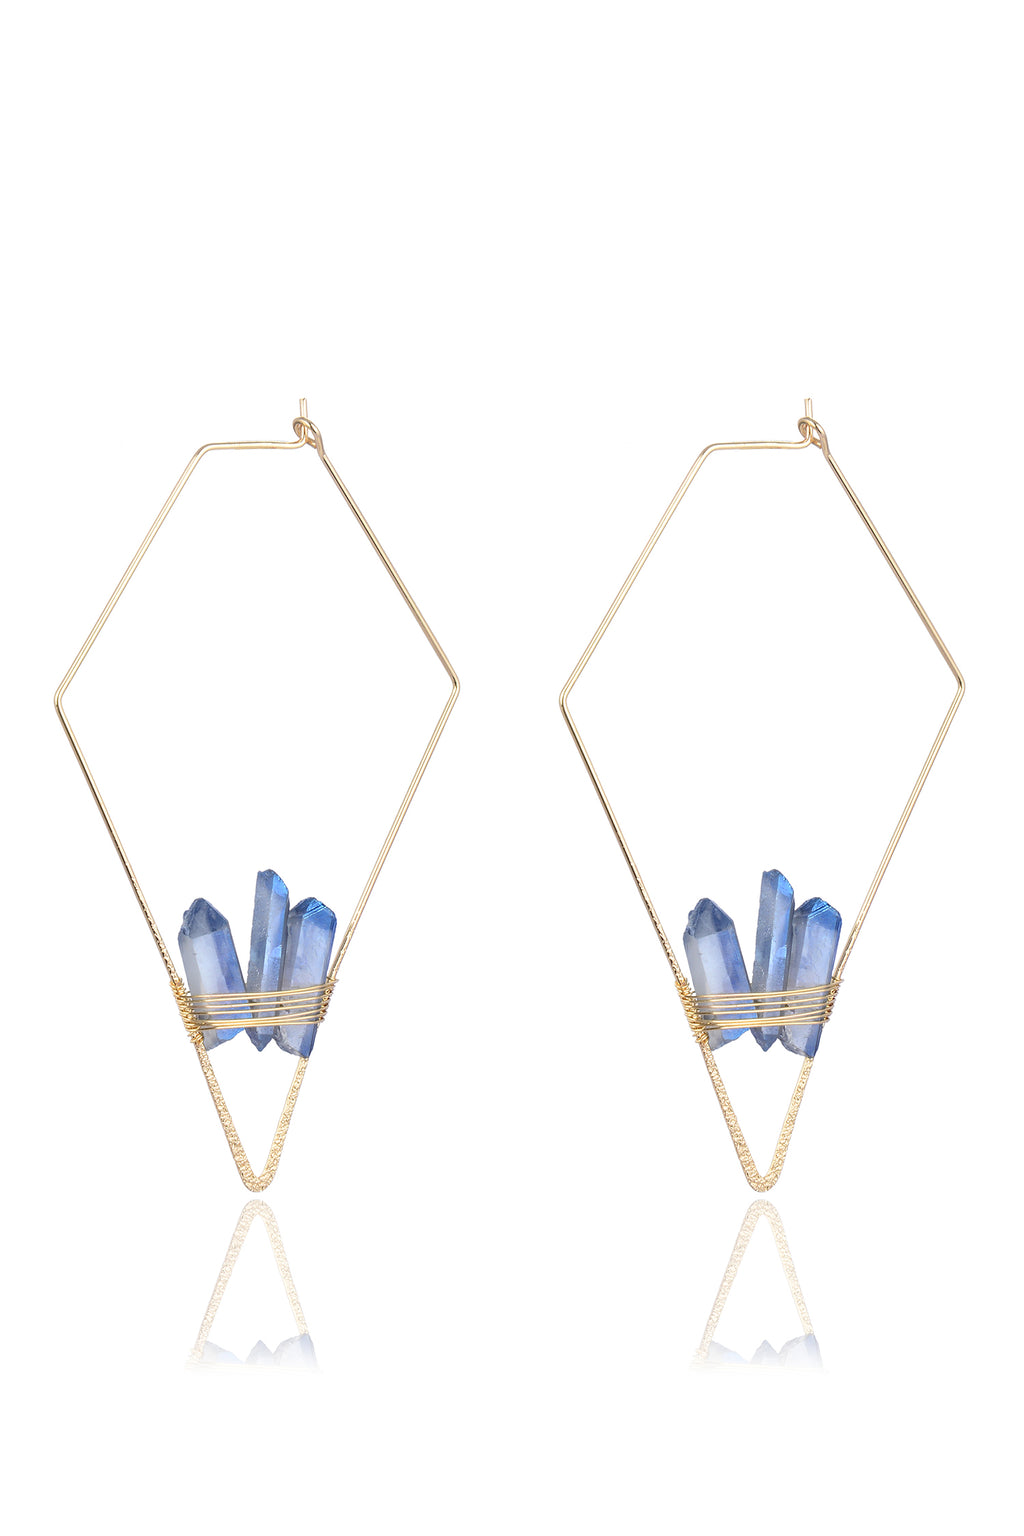 Gold tone brass kite earrings with blue quartz stones.